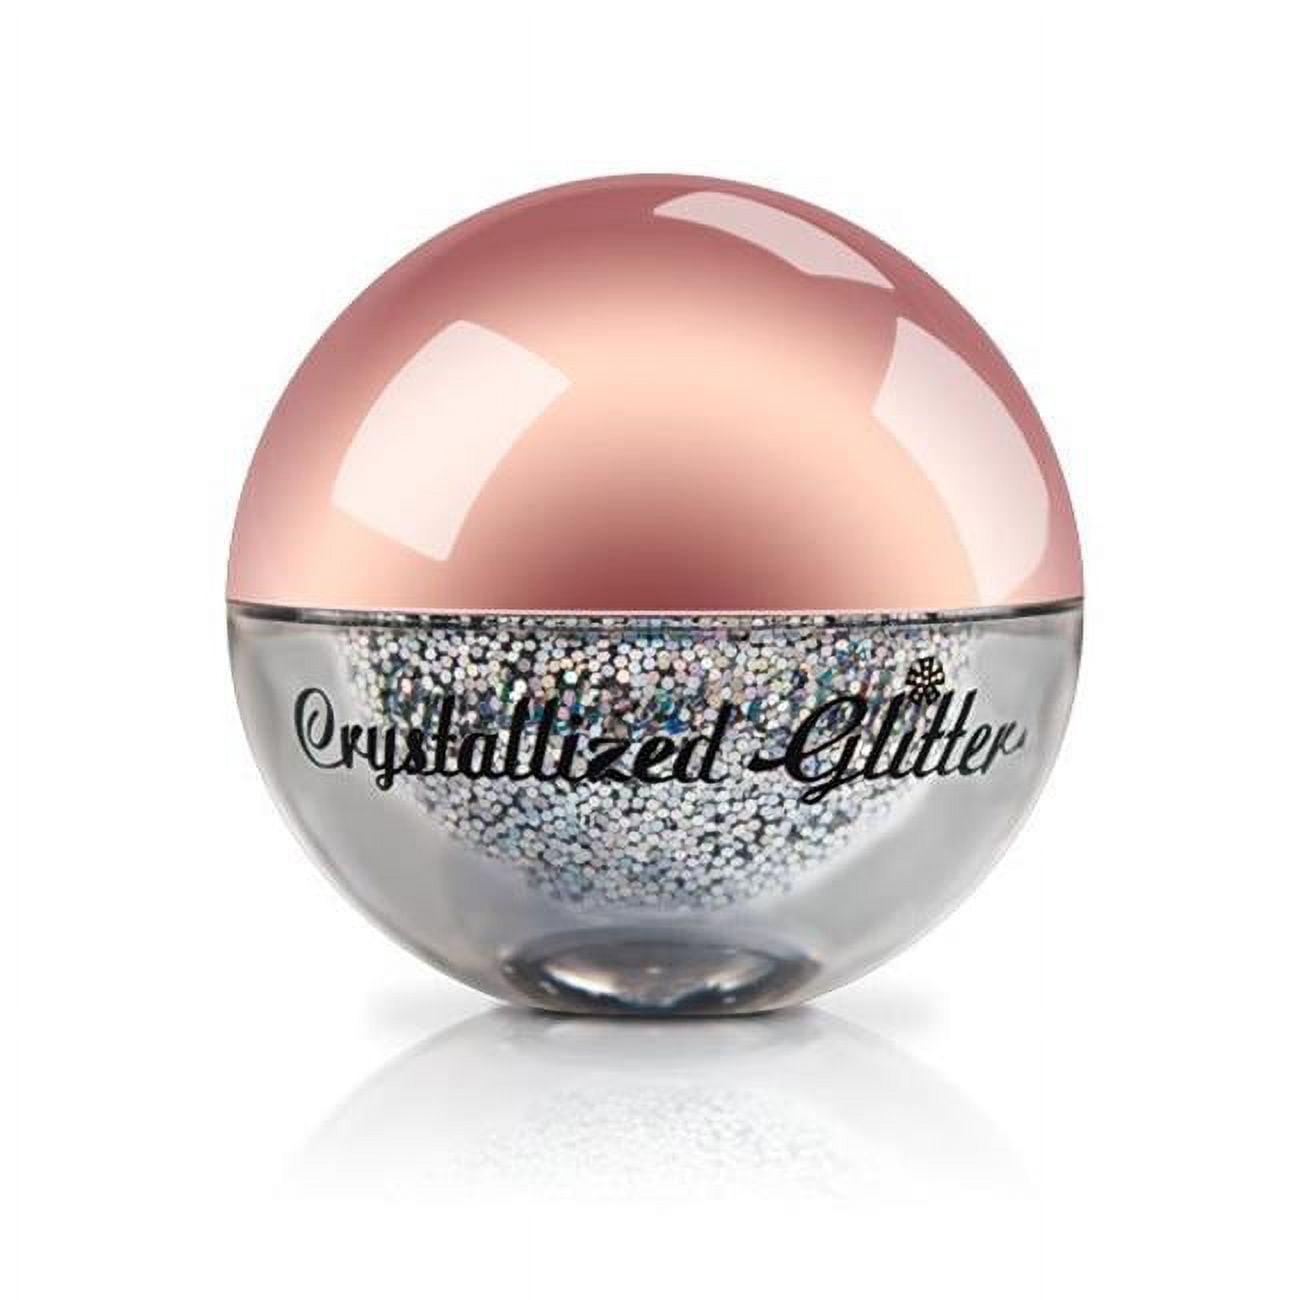 16506-goldrush Cosmetics Eyeshadow Loose Crystallized Glitter, Gold Rush